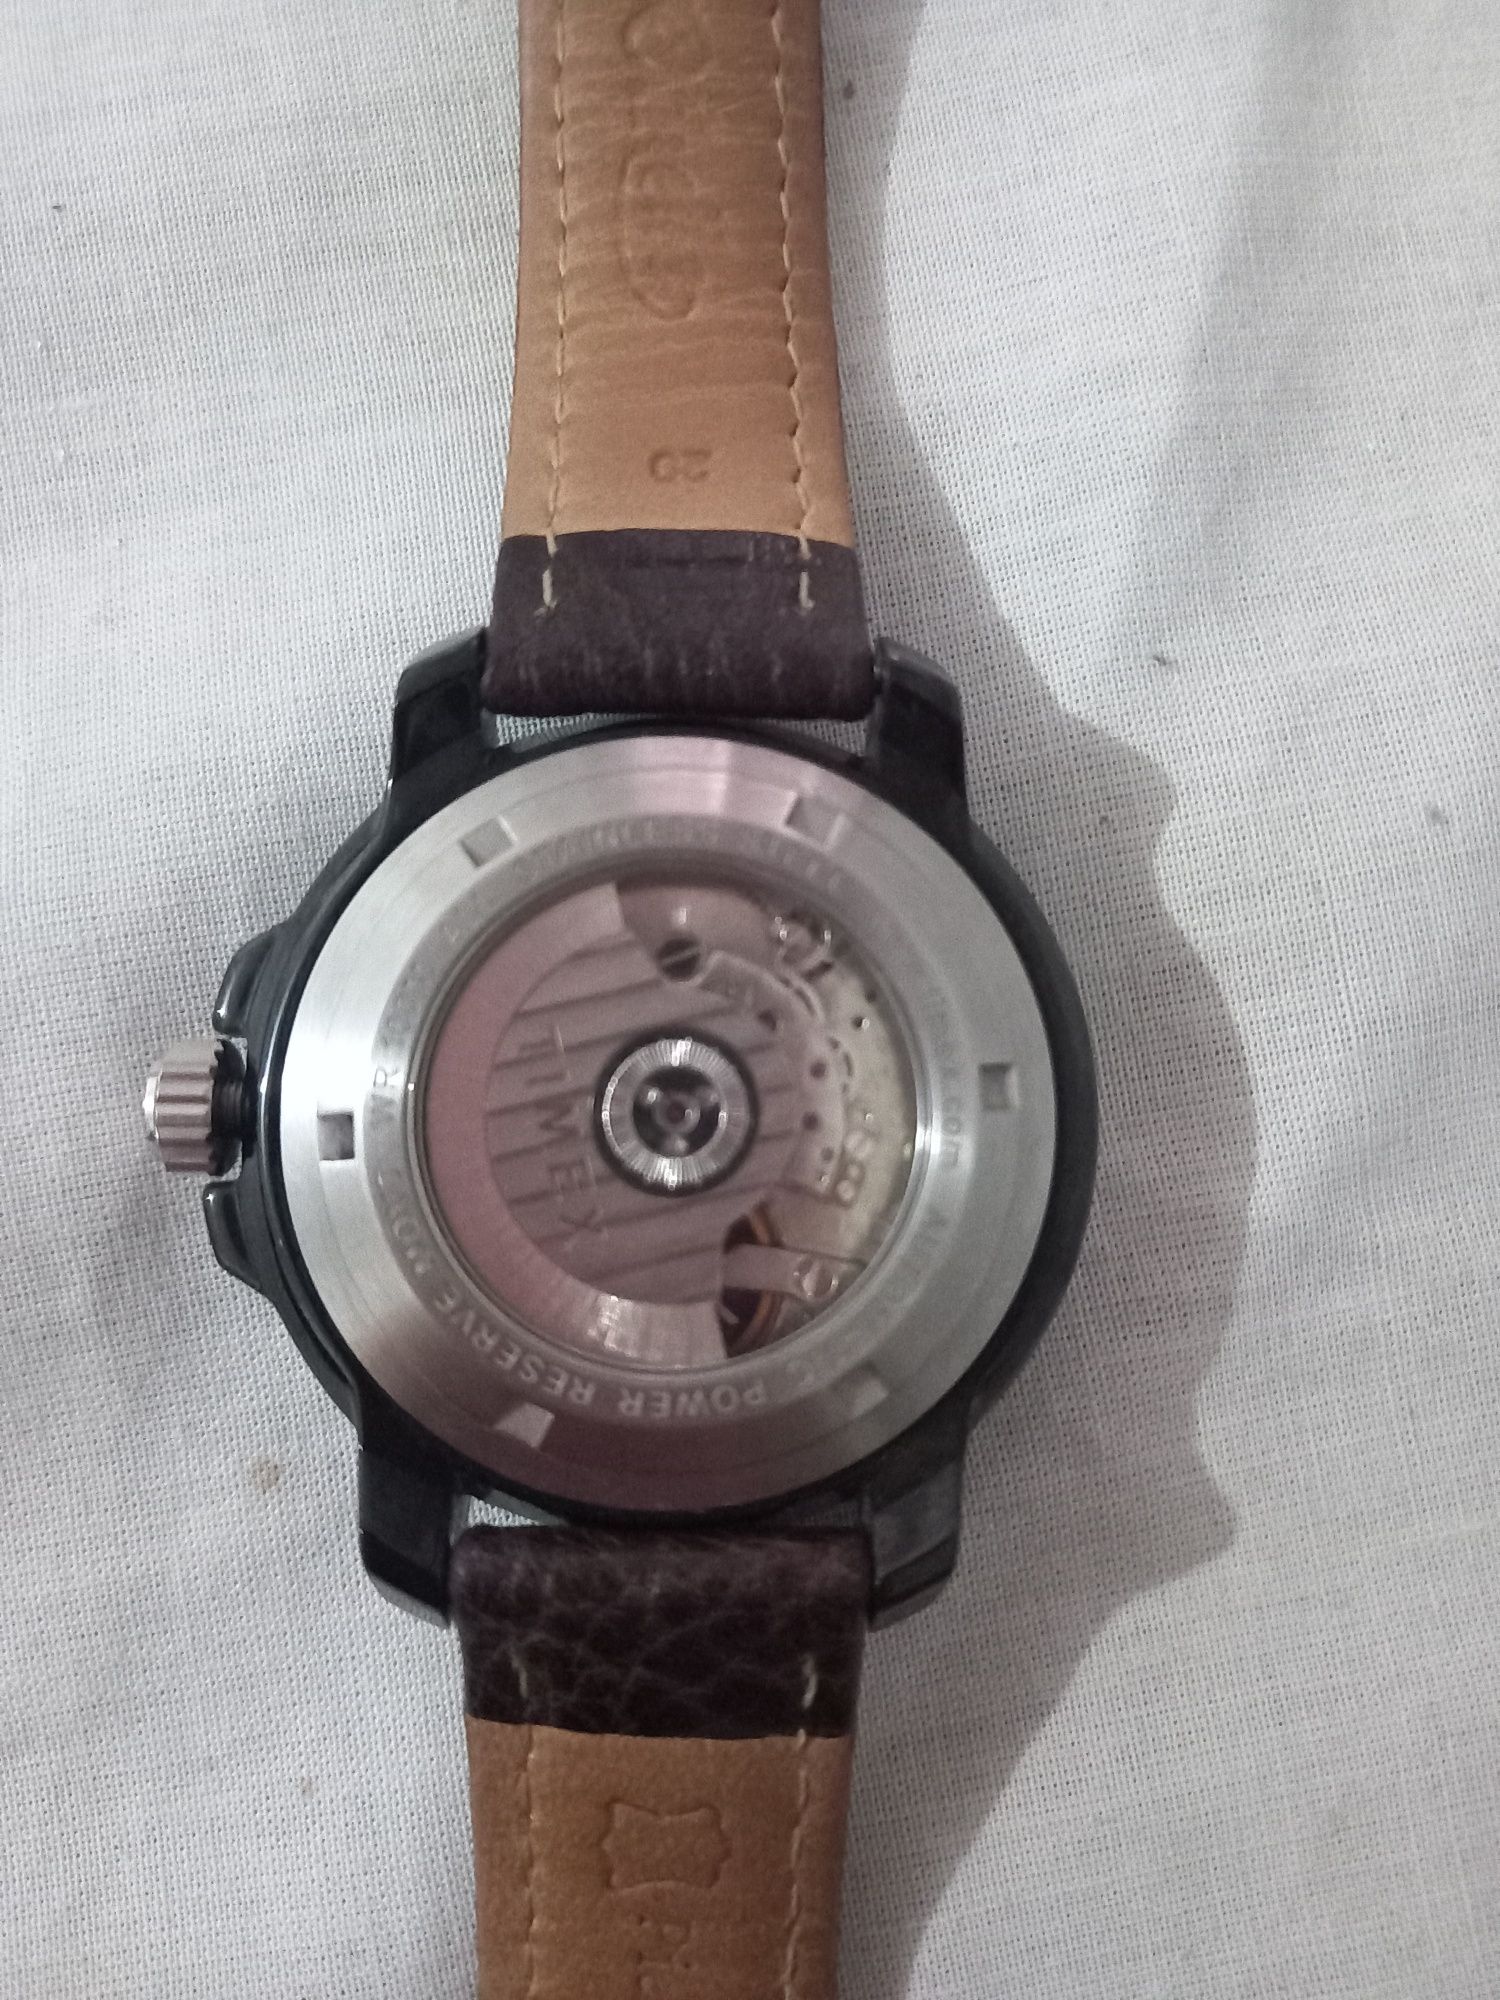 Relogio Timex pulseira de couro